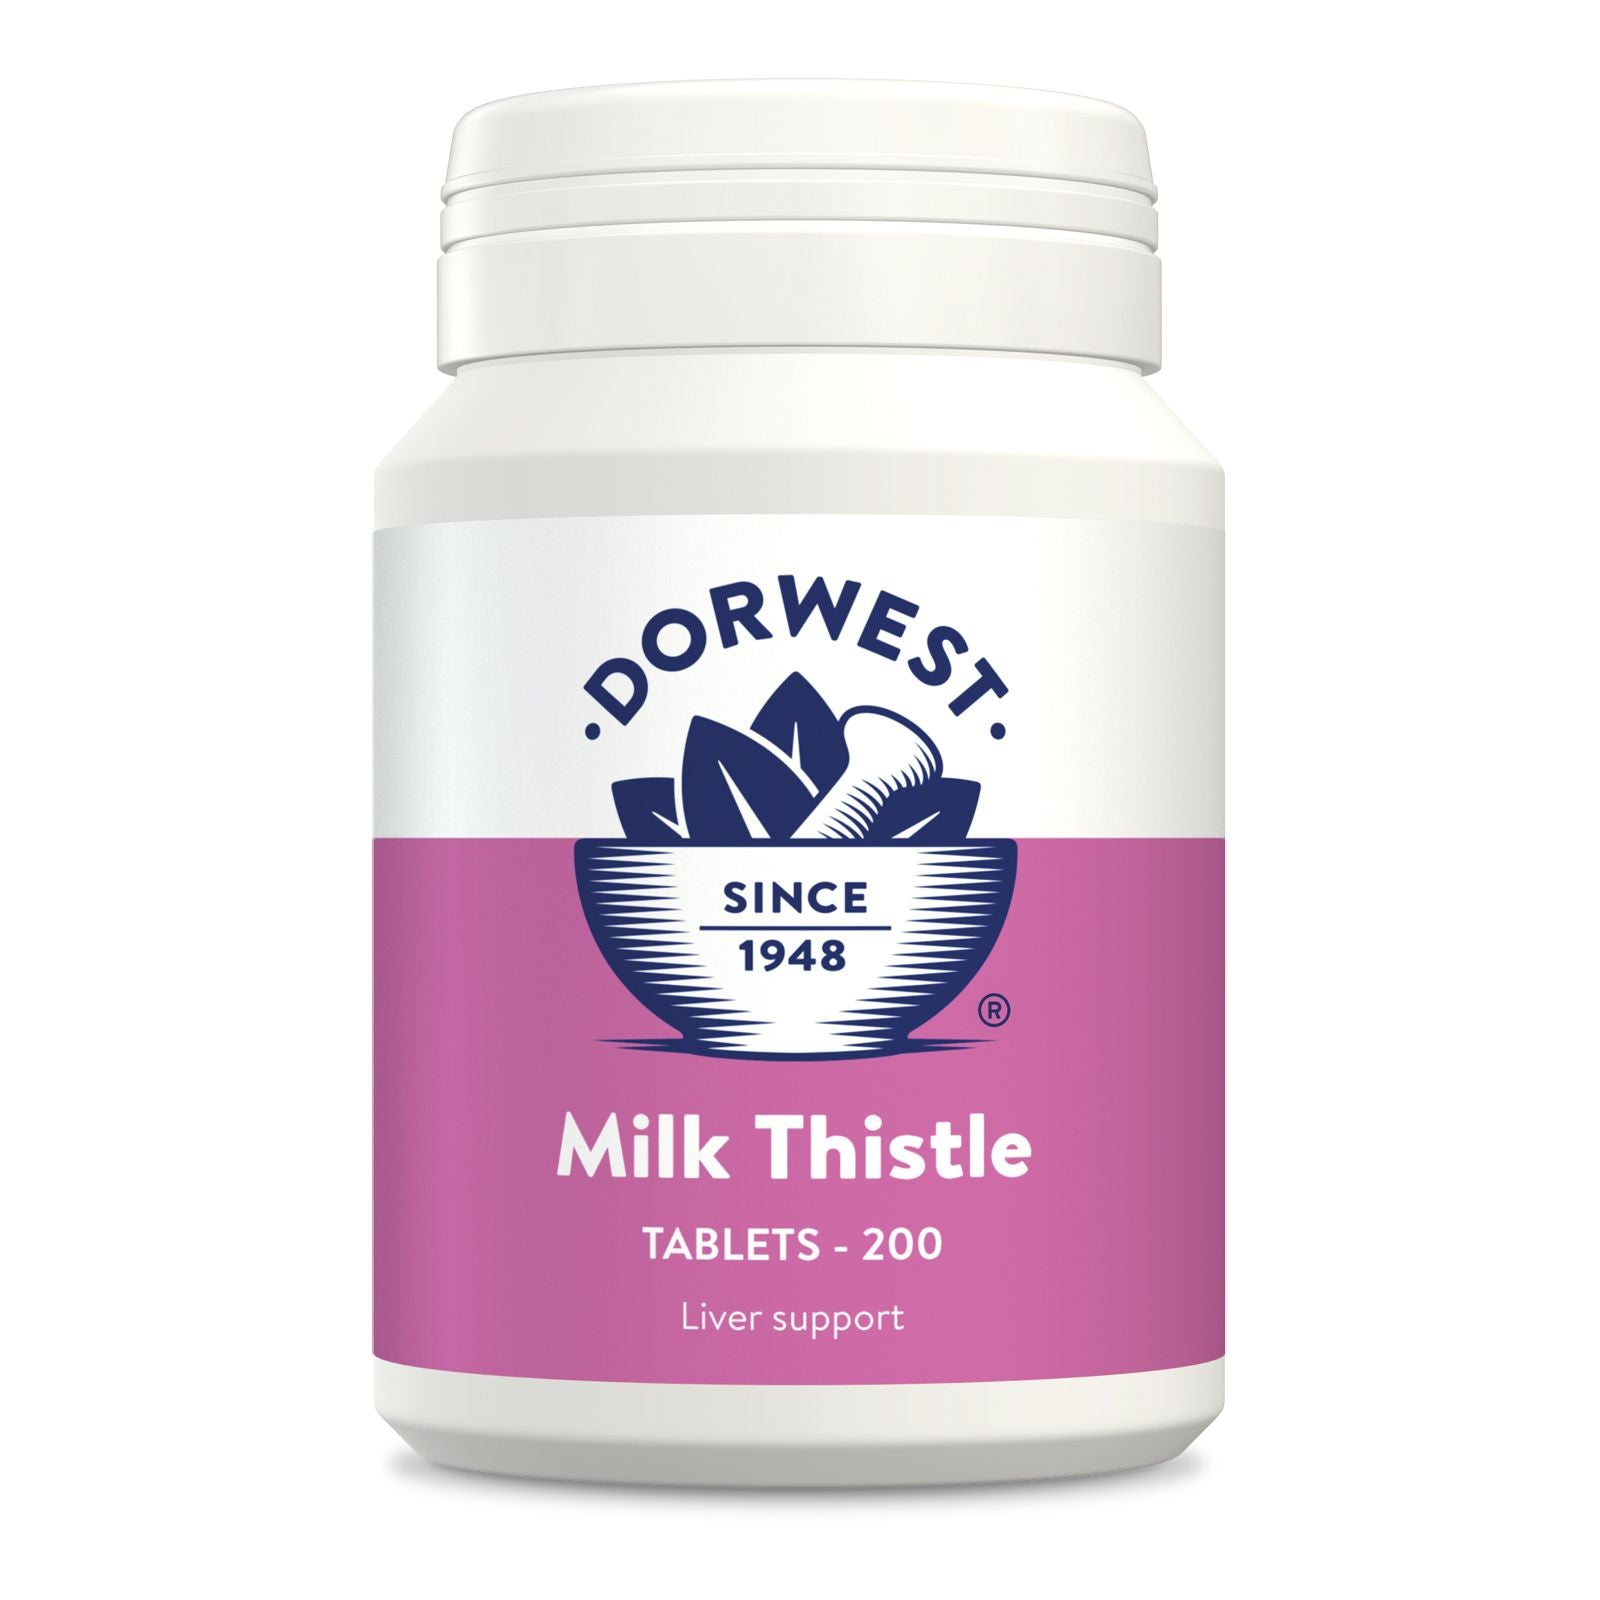 Dorwest Herbs Milk Thistle Tablets Liver Supplement